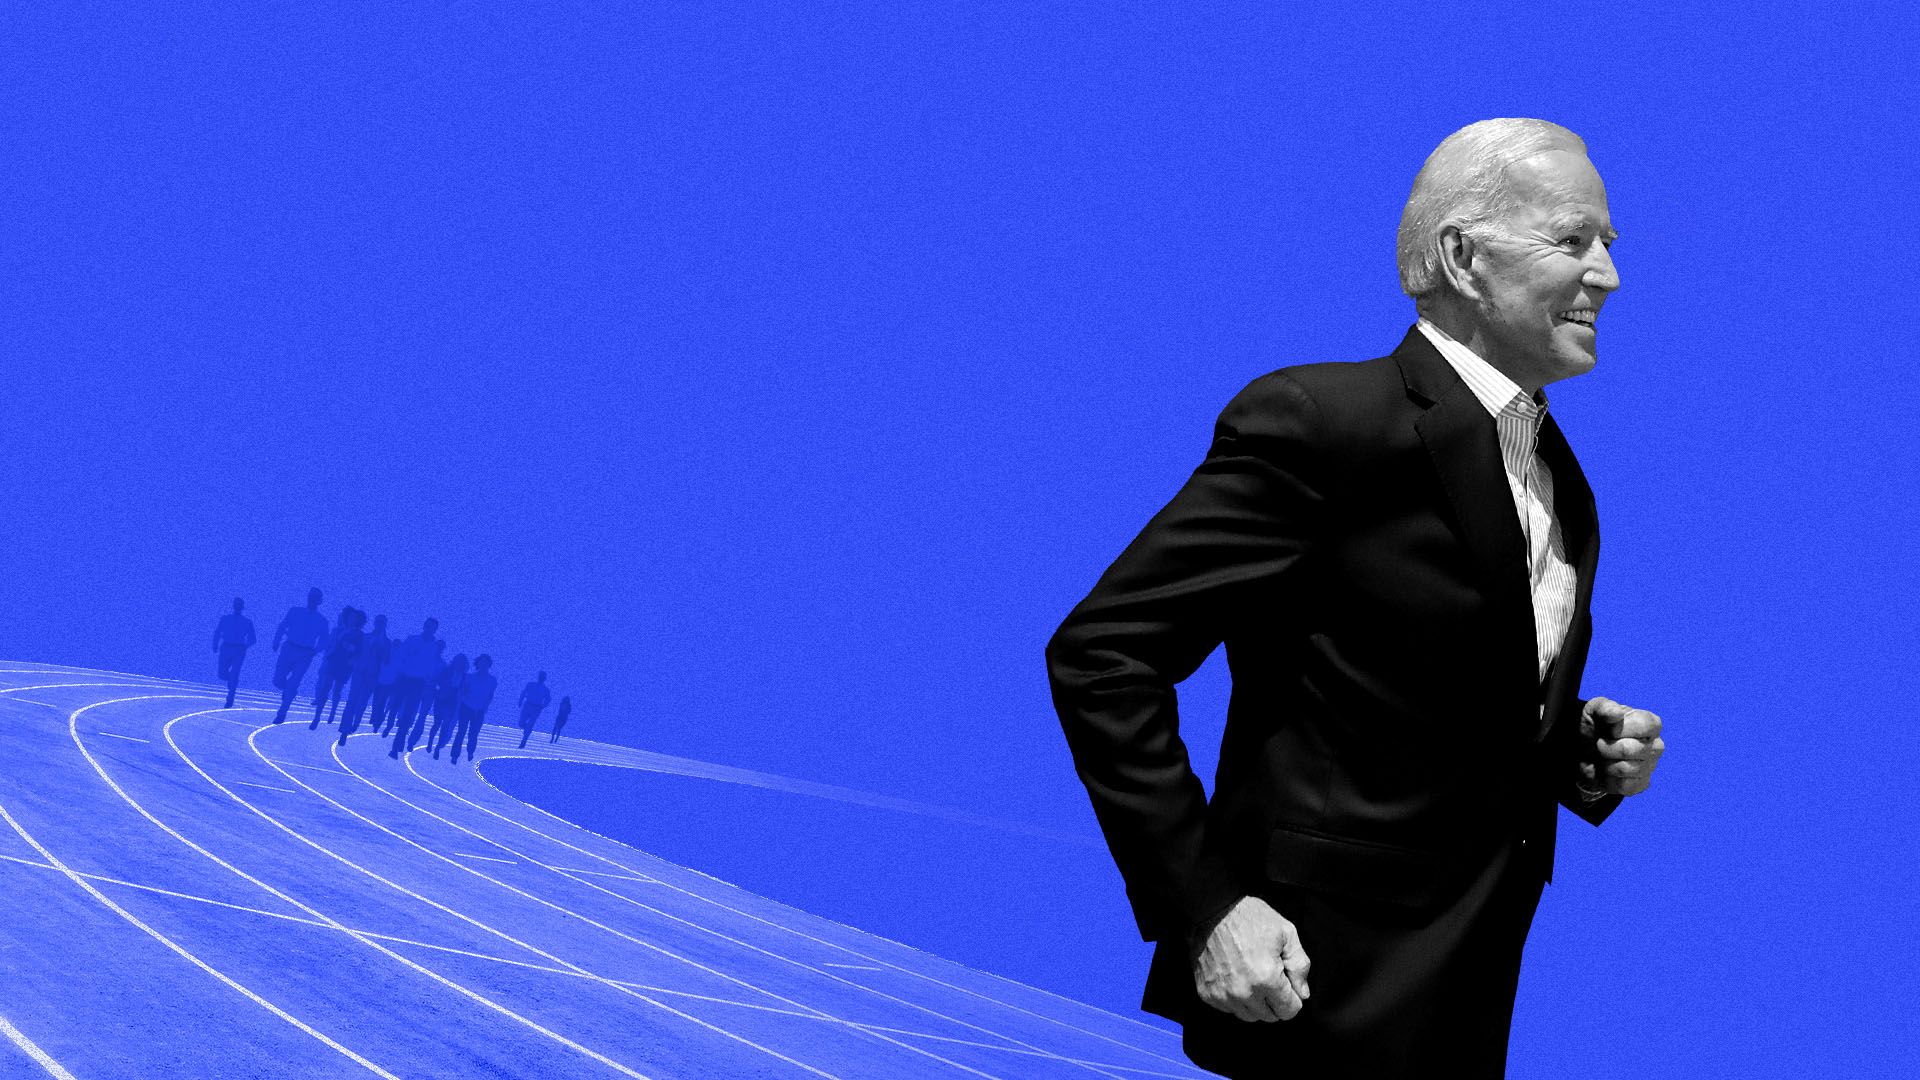 Illustration of Joe Biden running ahead of the pack of Democratic candidates